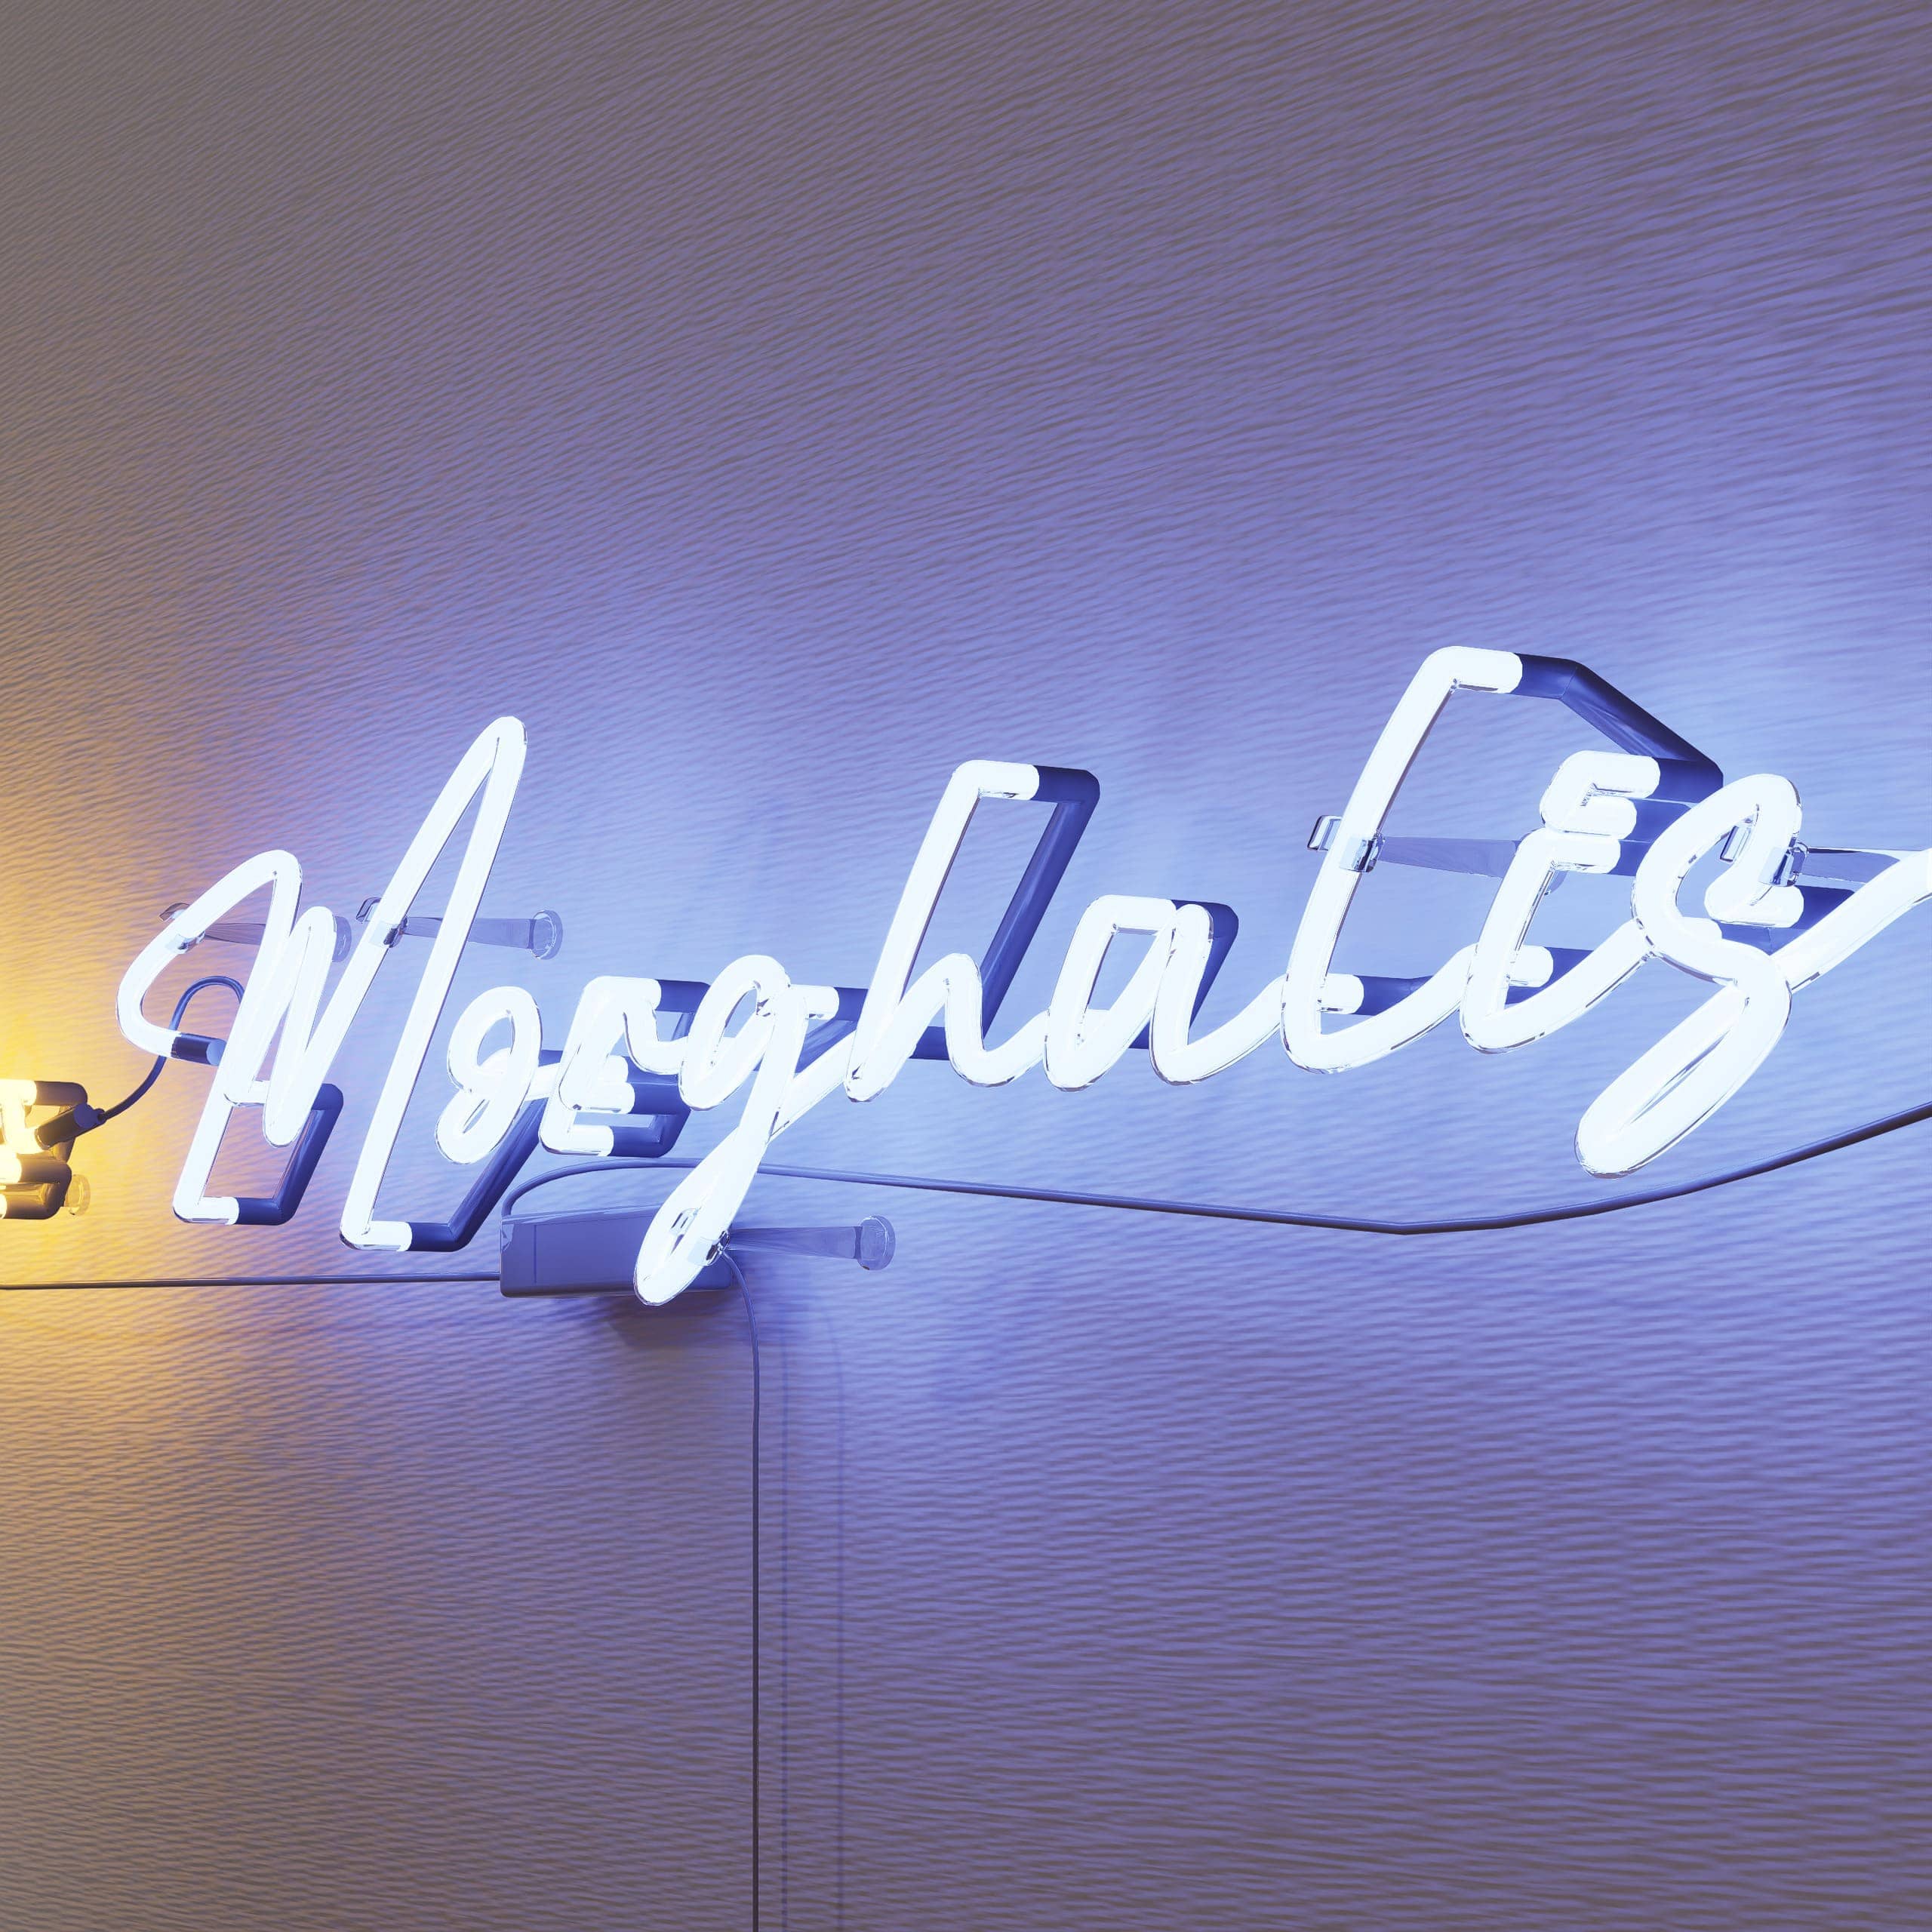 vintage-neon-signs-inspire-with-'valar-morghulis'